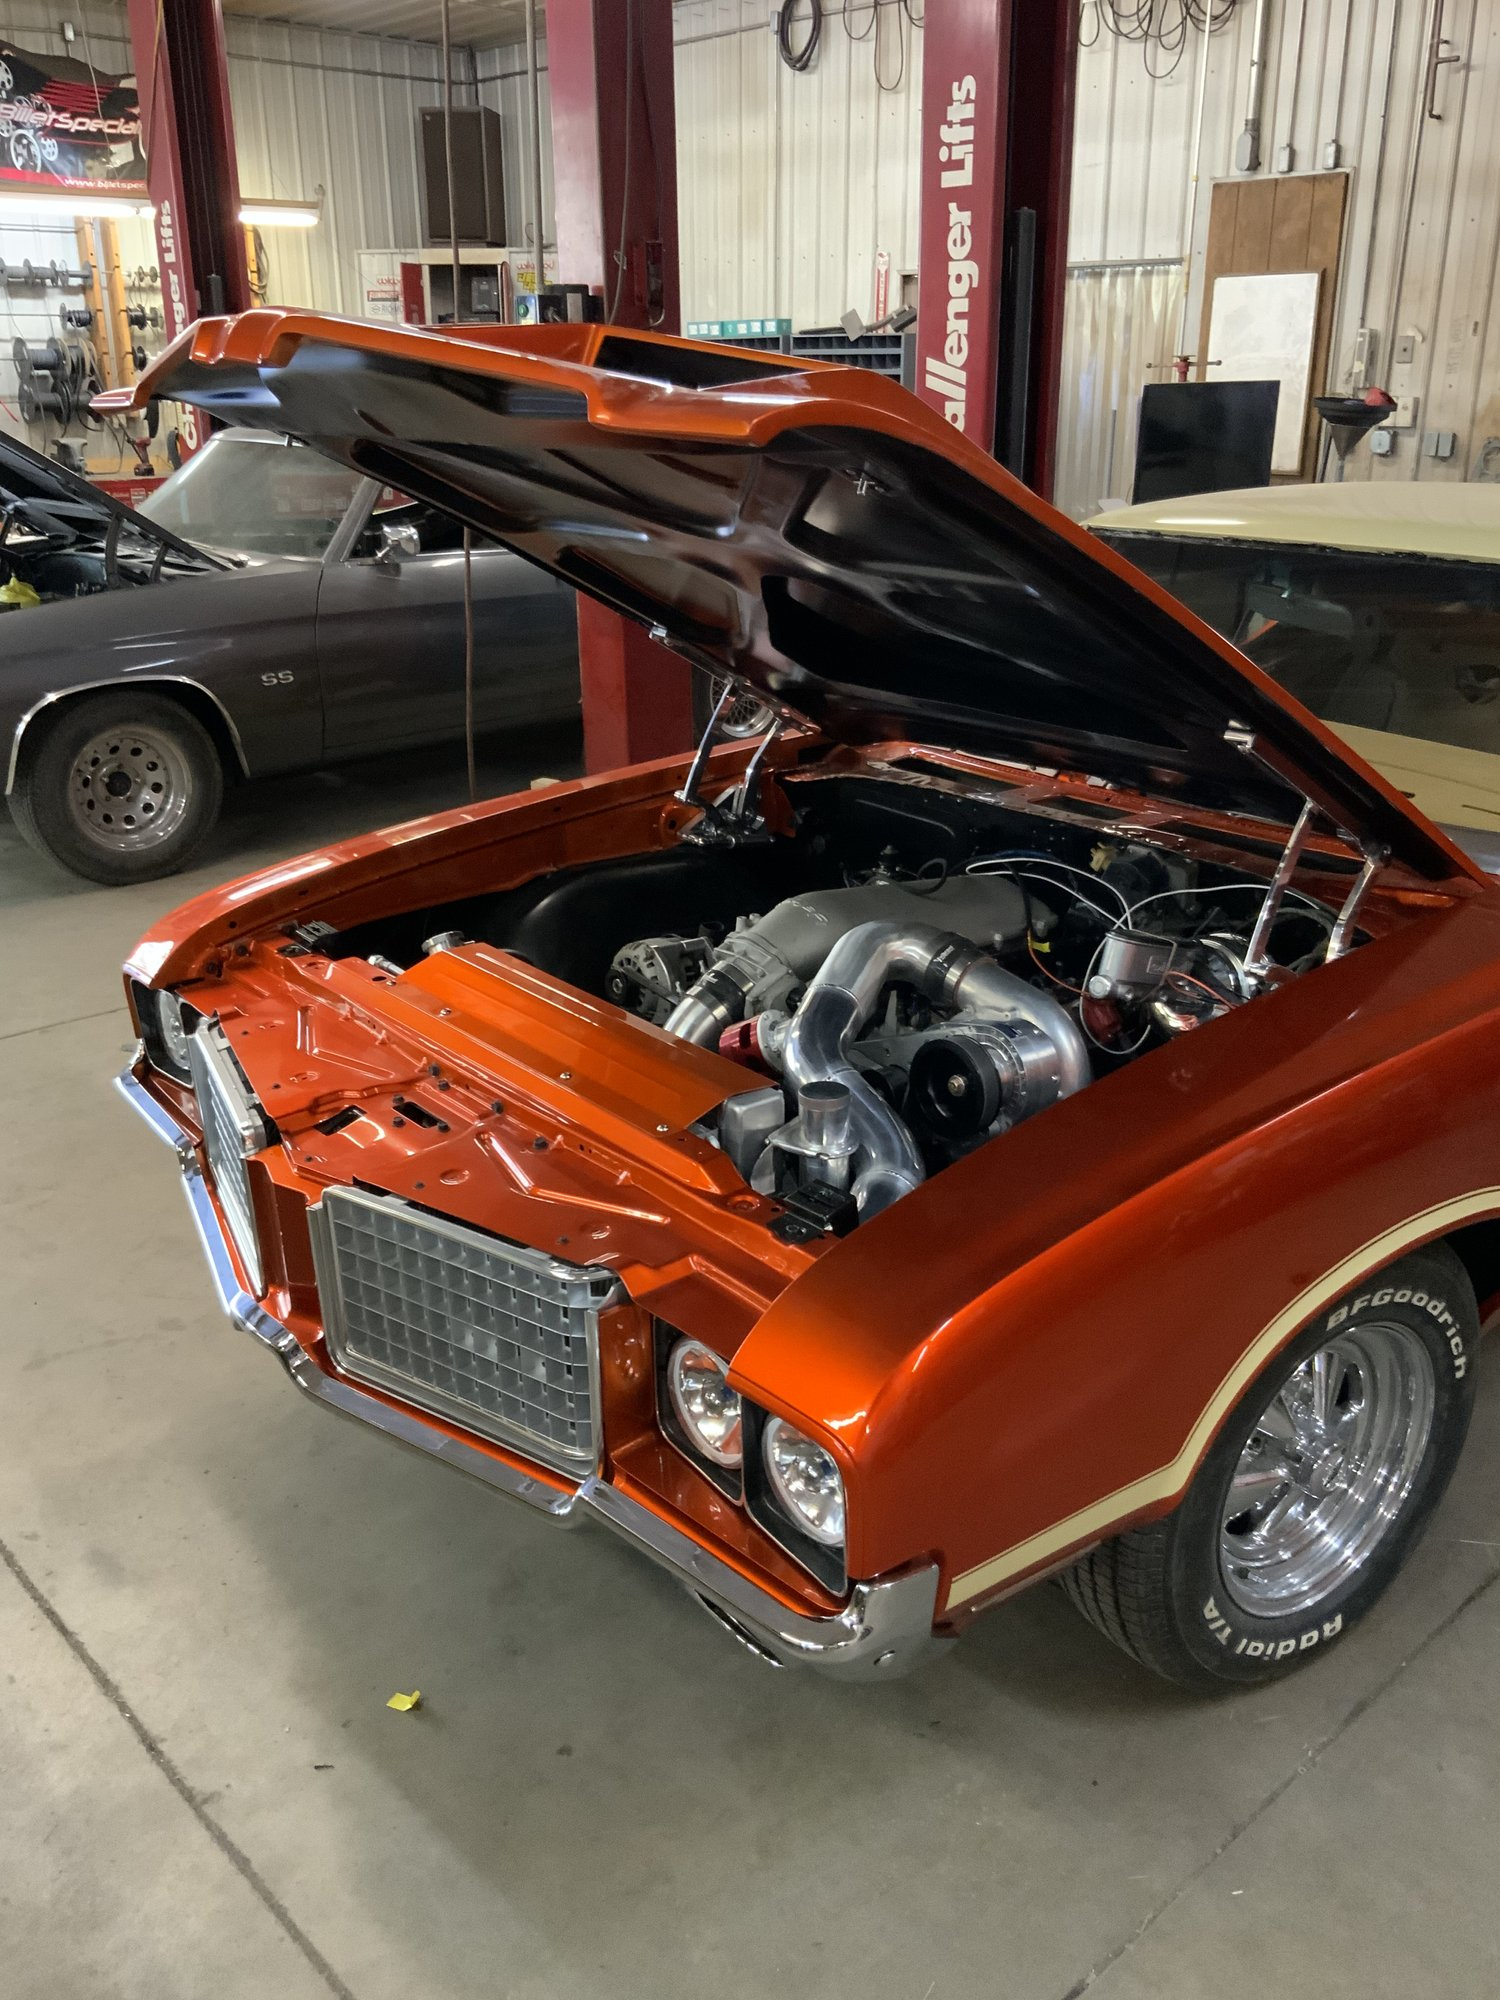 1972-Cutlass-old-car-restoration-hot-rod-factory-cars-bodywork-rebuild(77).png